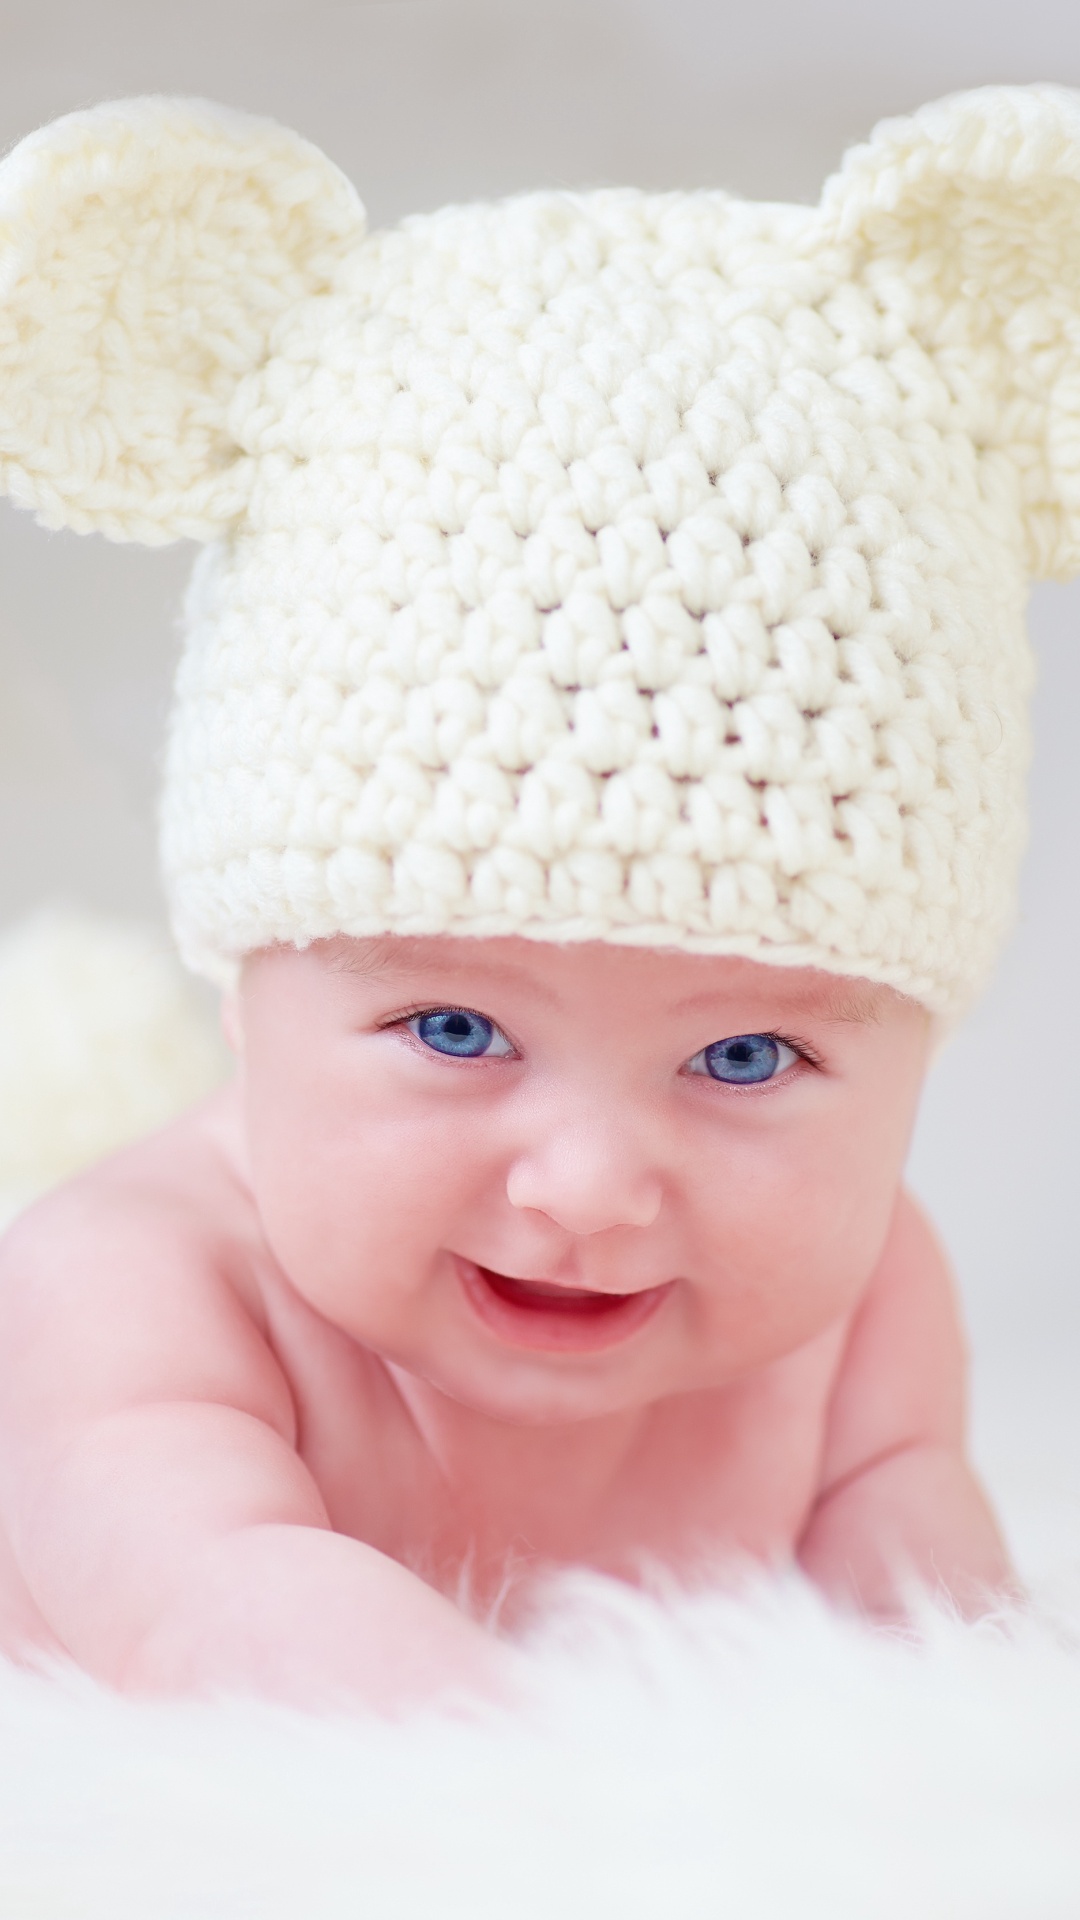 Smile Newborn Baby Wallpapers - 1080x1920 - 295162